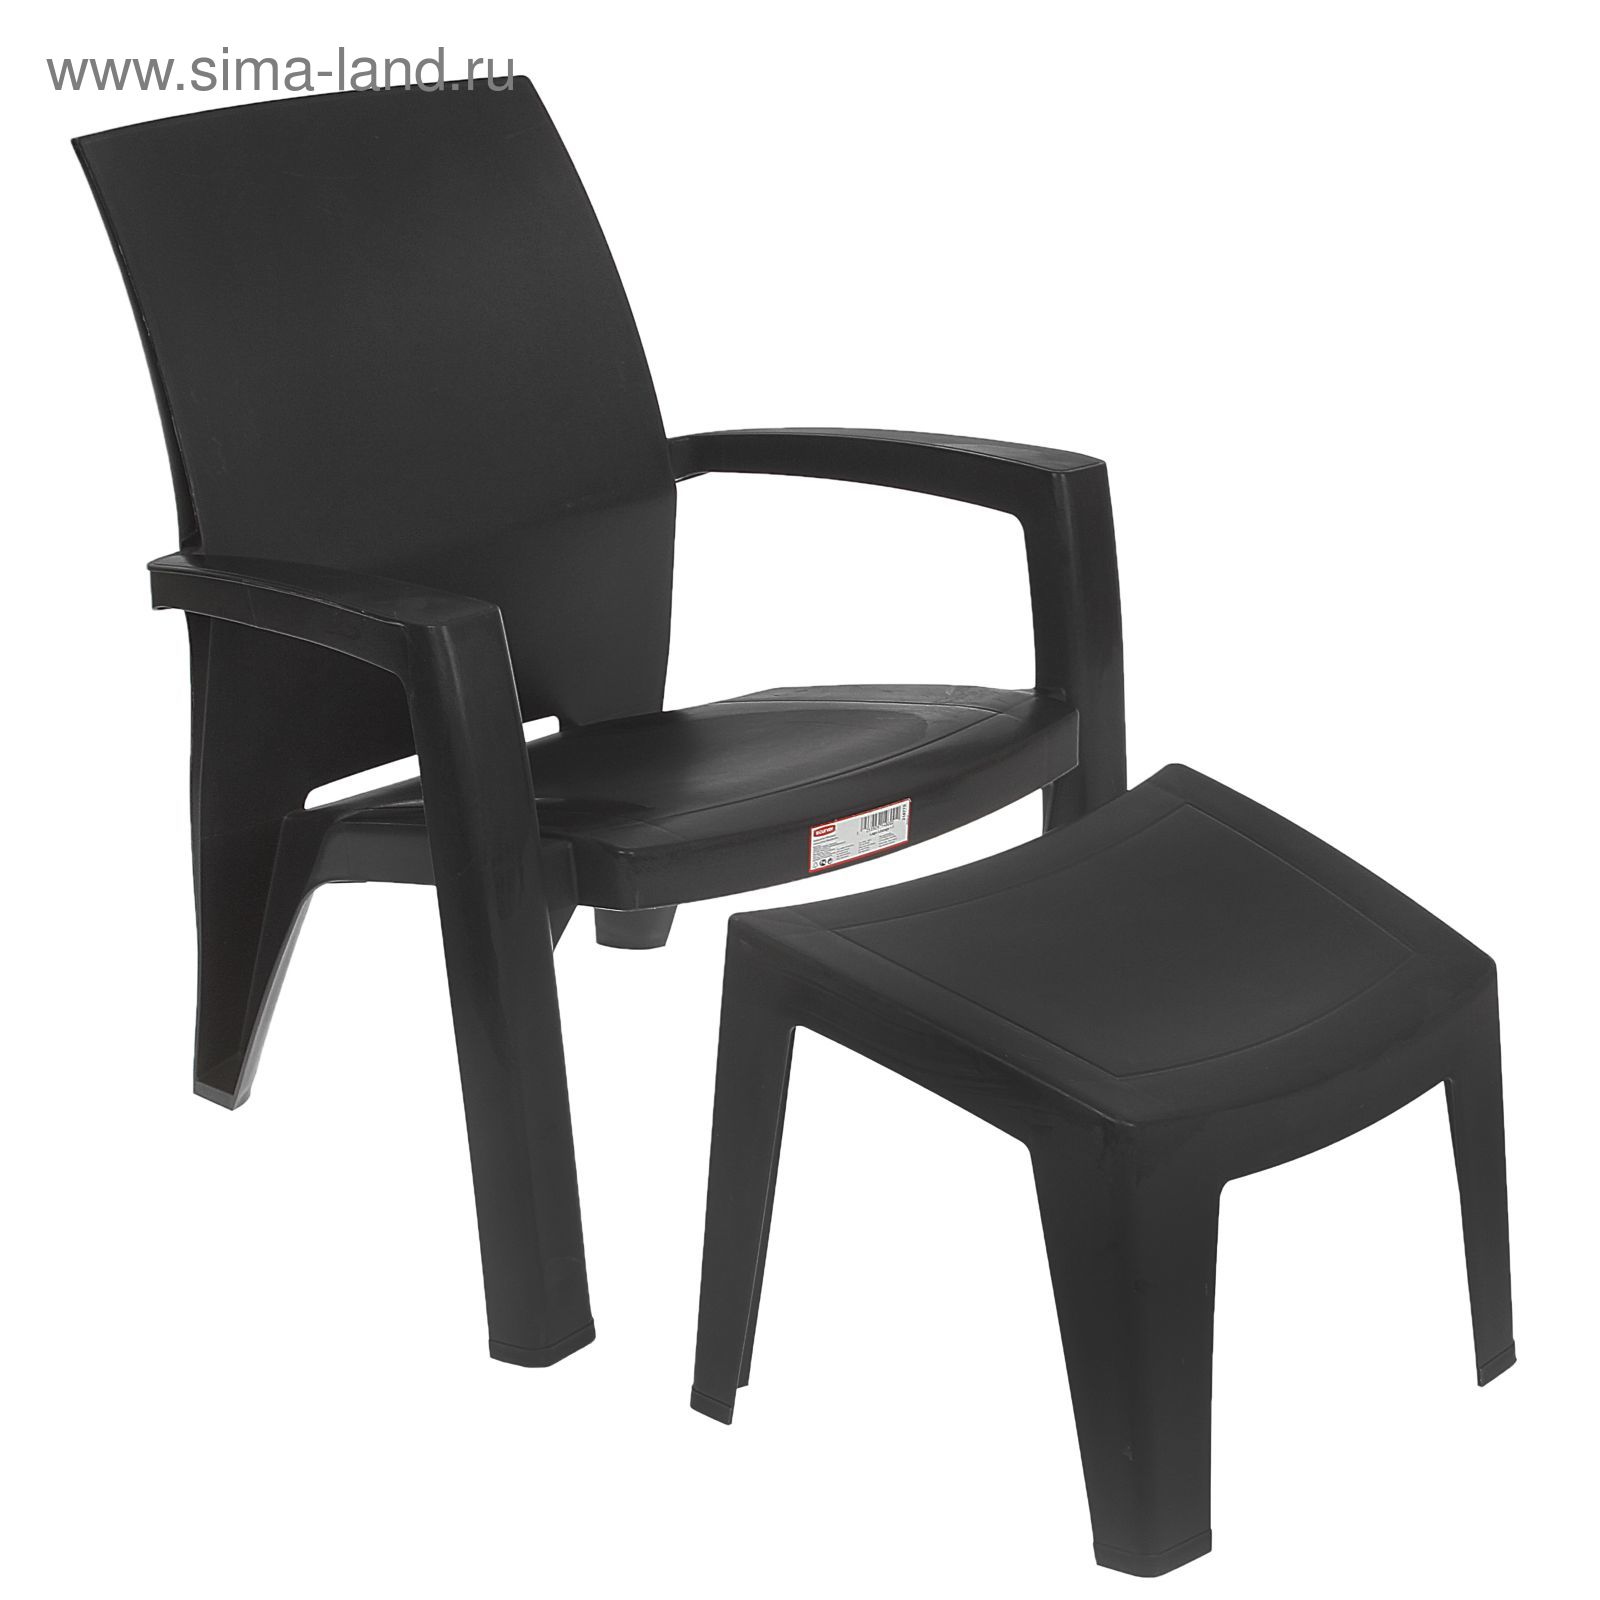 Набор Lago lounge Curver: стул, подножка, цвет антрацит